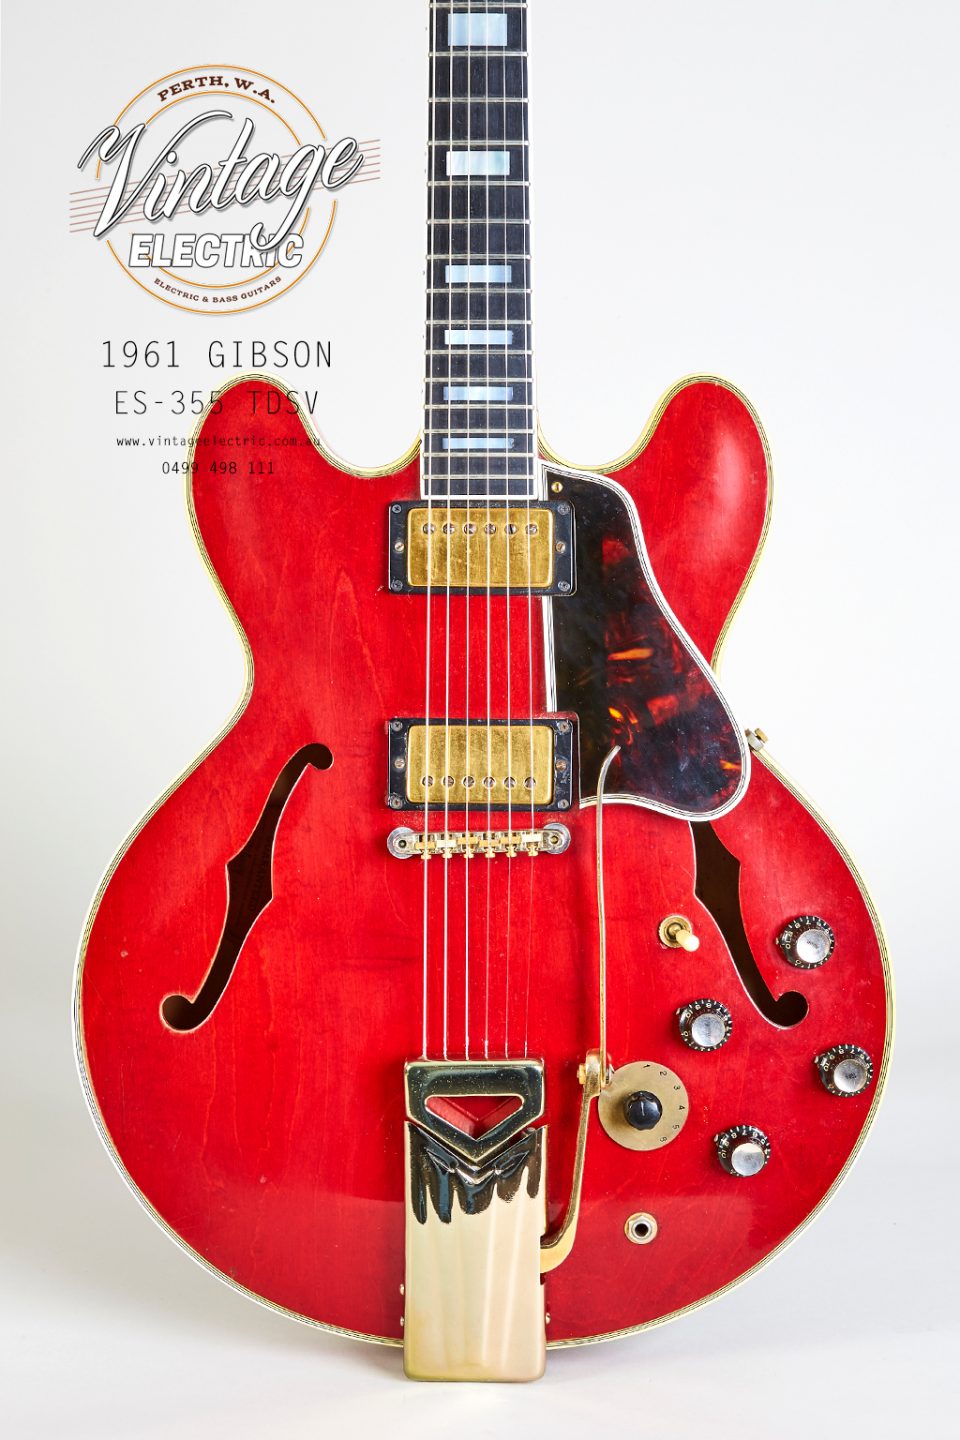 1961 Gibson ES-355 TDSV Body